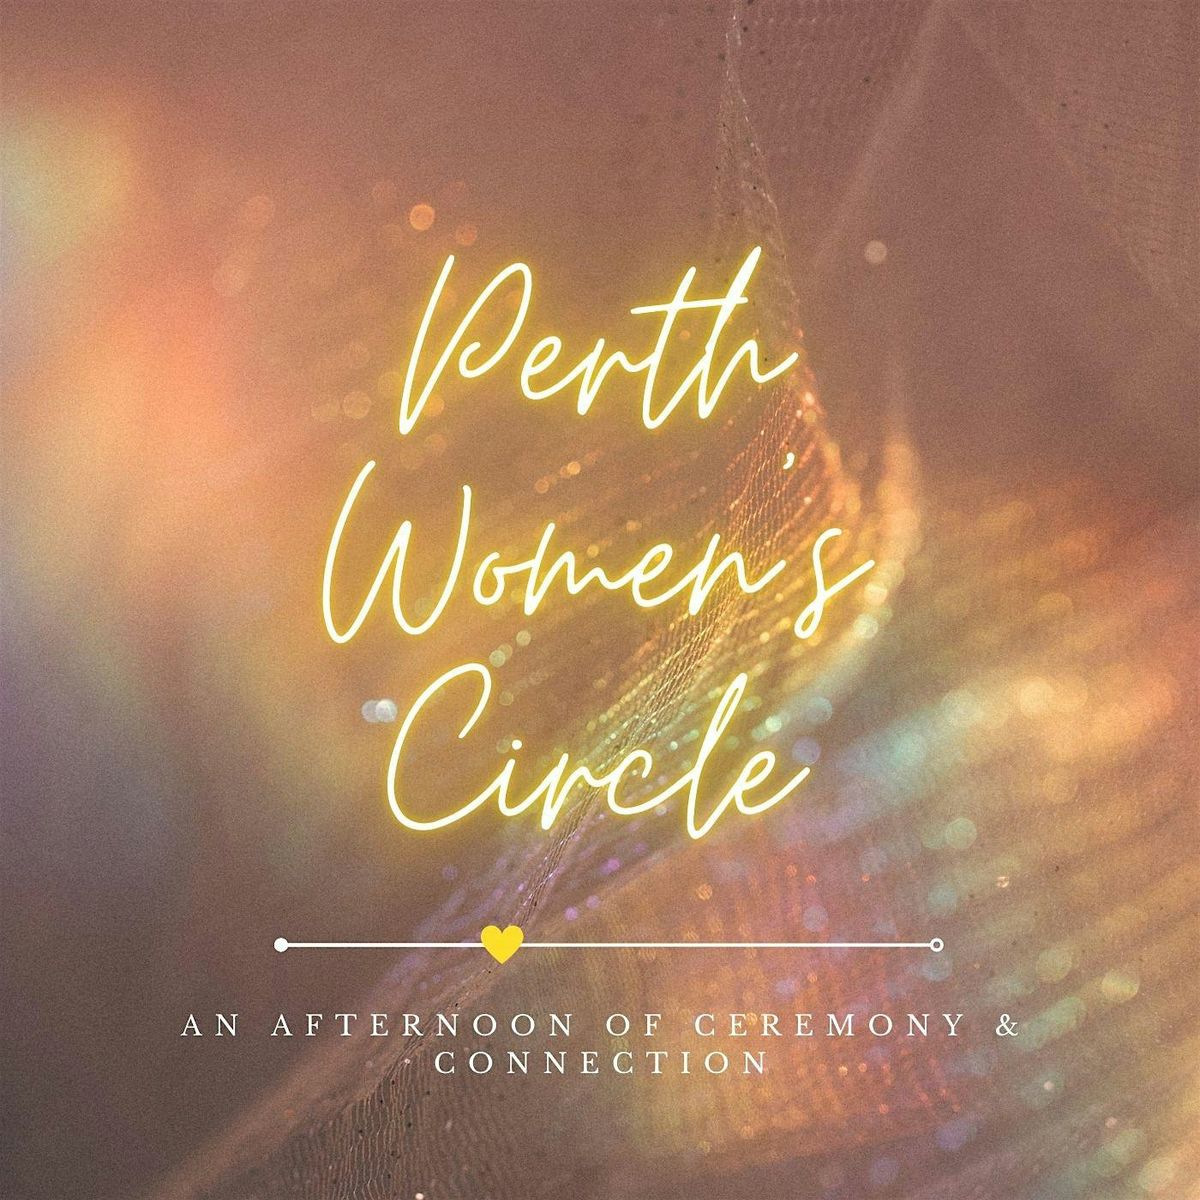 July Perth Women's Circle